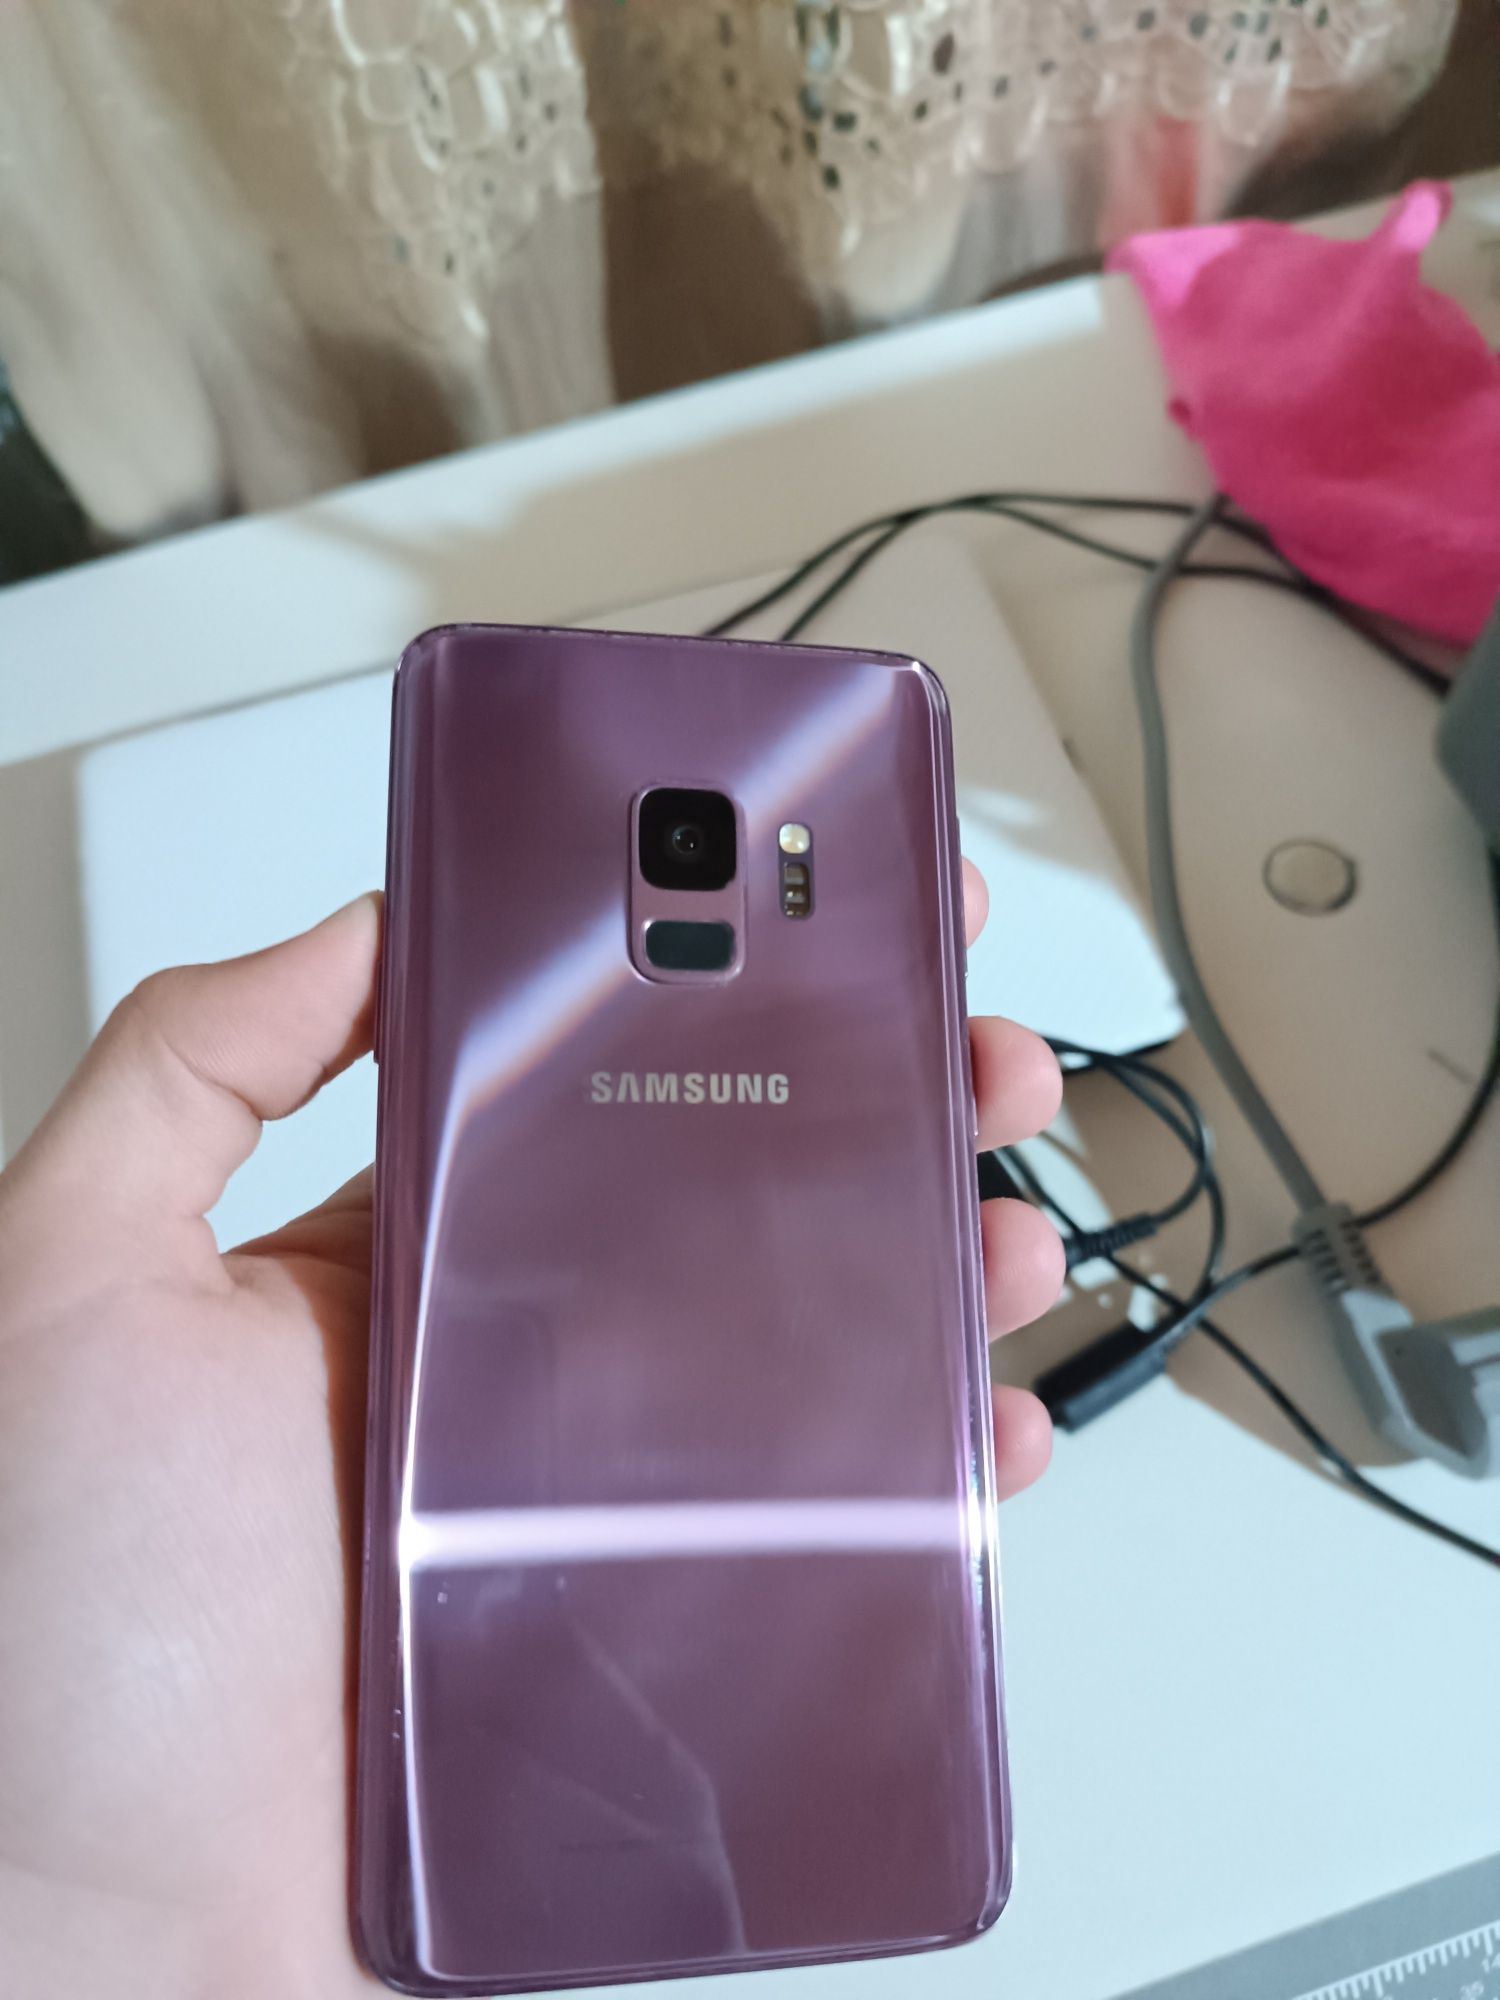 Samsung s9  purple ideal